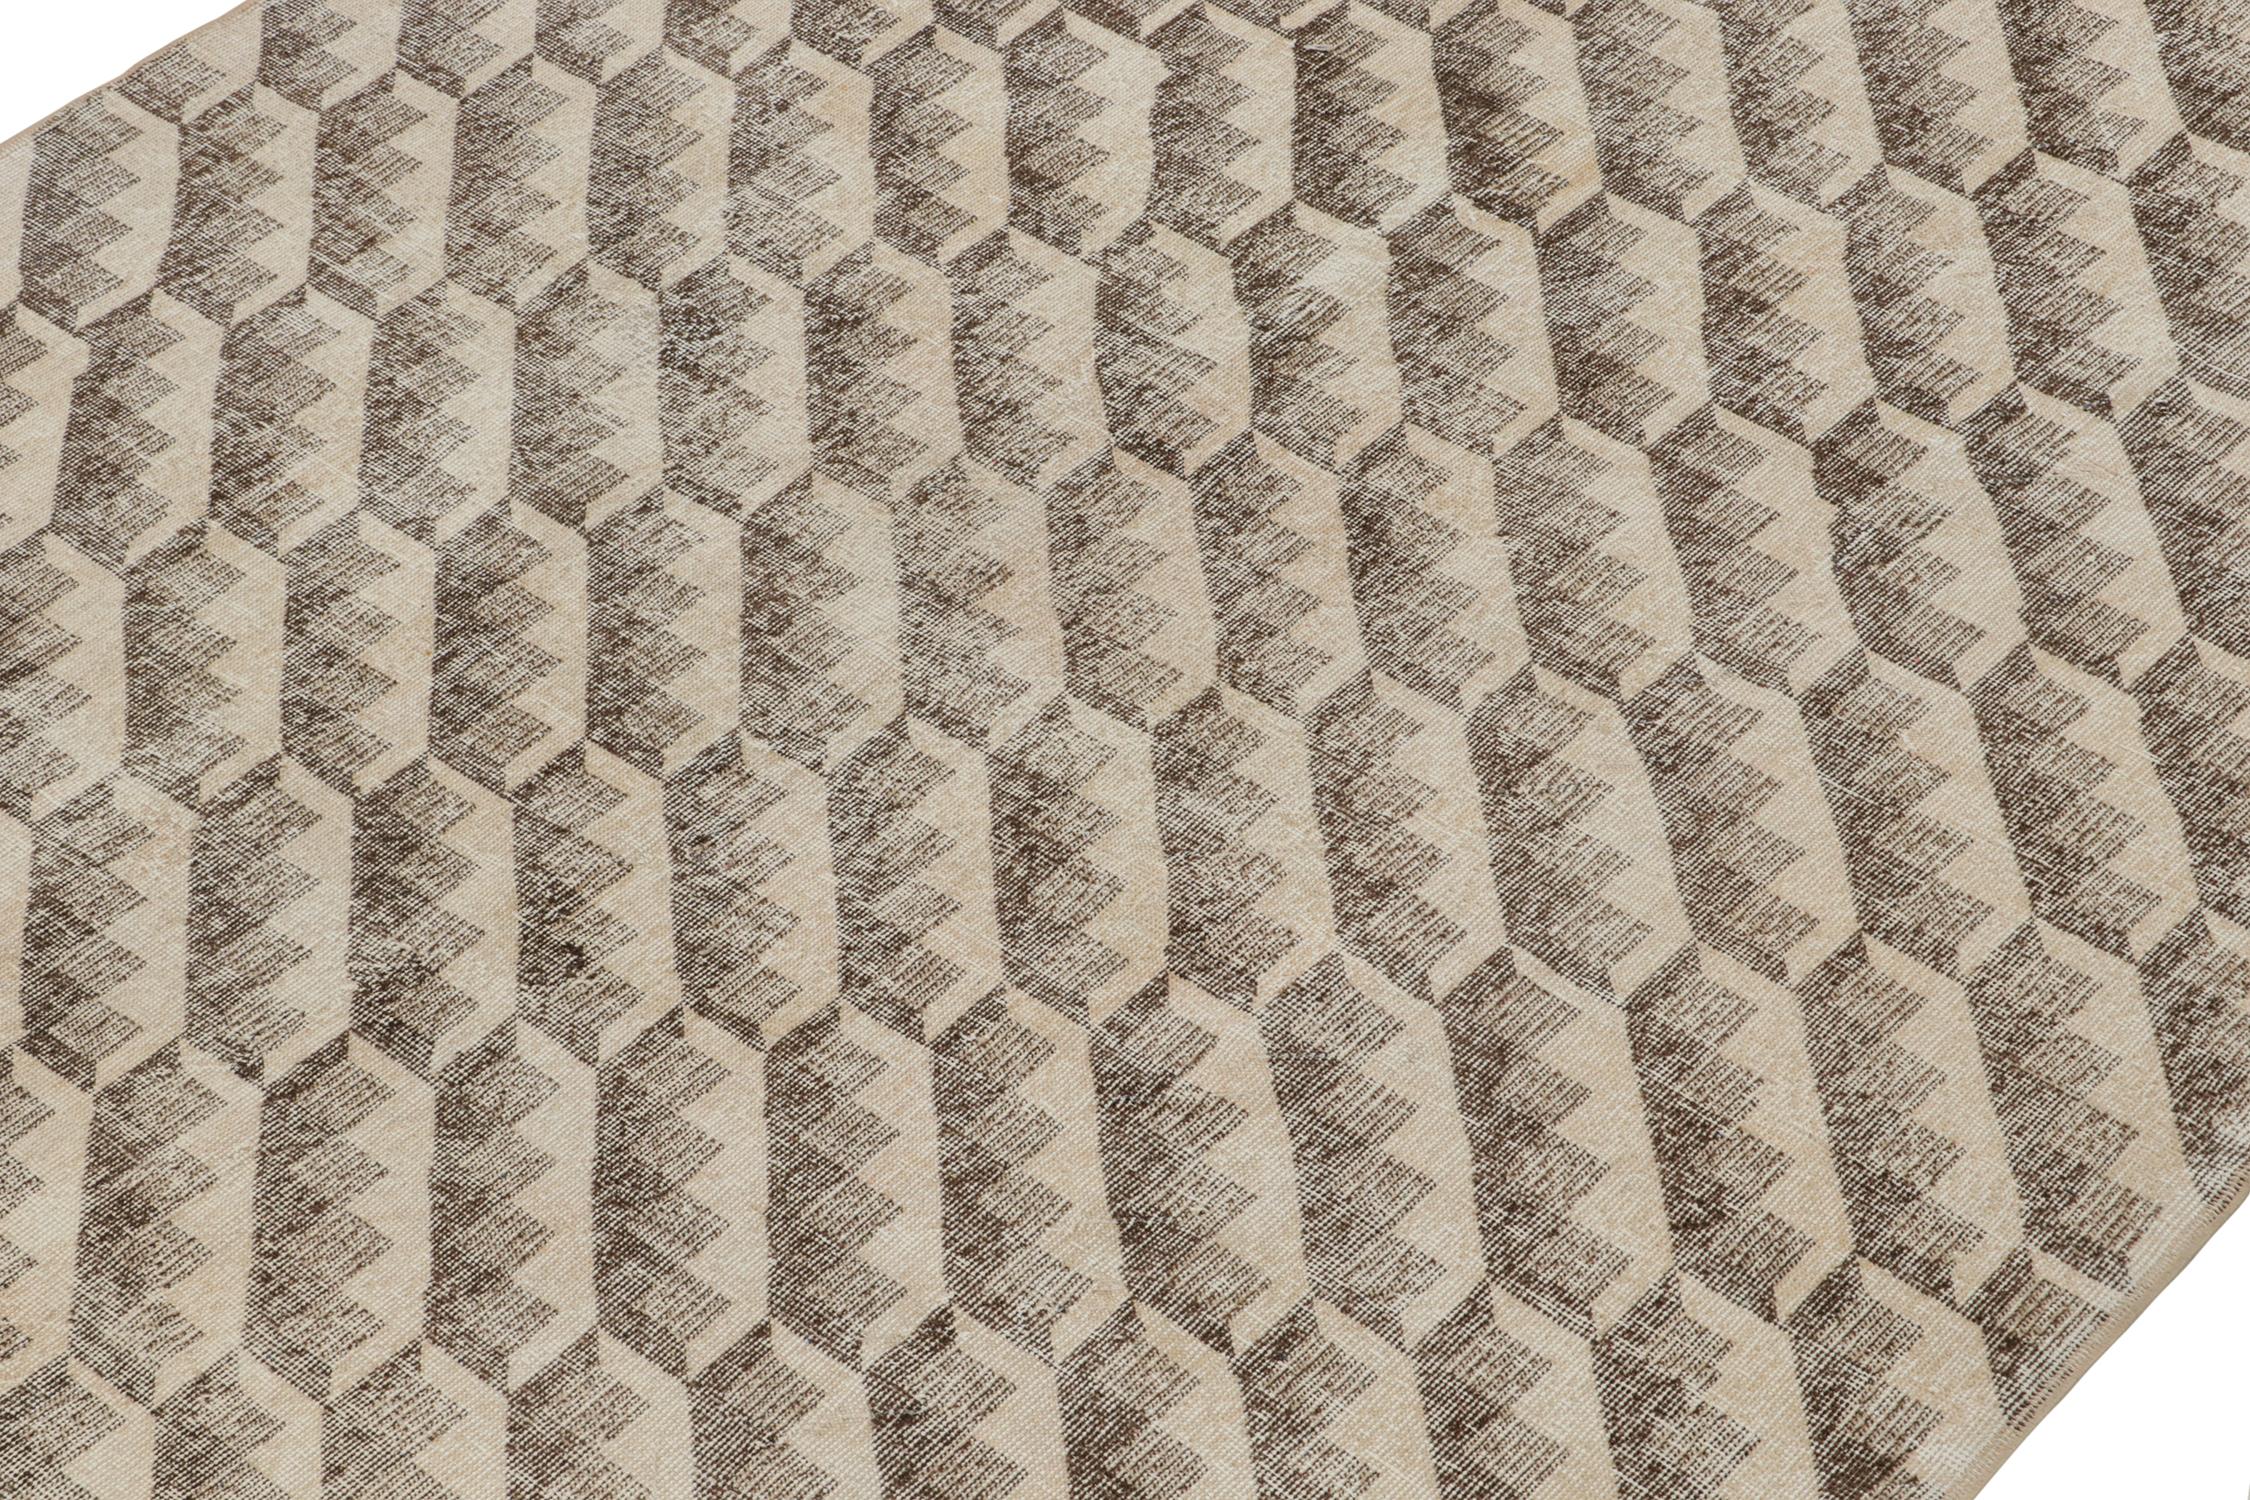 Turkish Vintage Zeki Müren rug in Beige and Brown Geometric Pattern, by Rug & Kilim For Sale